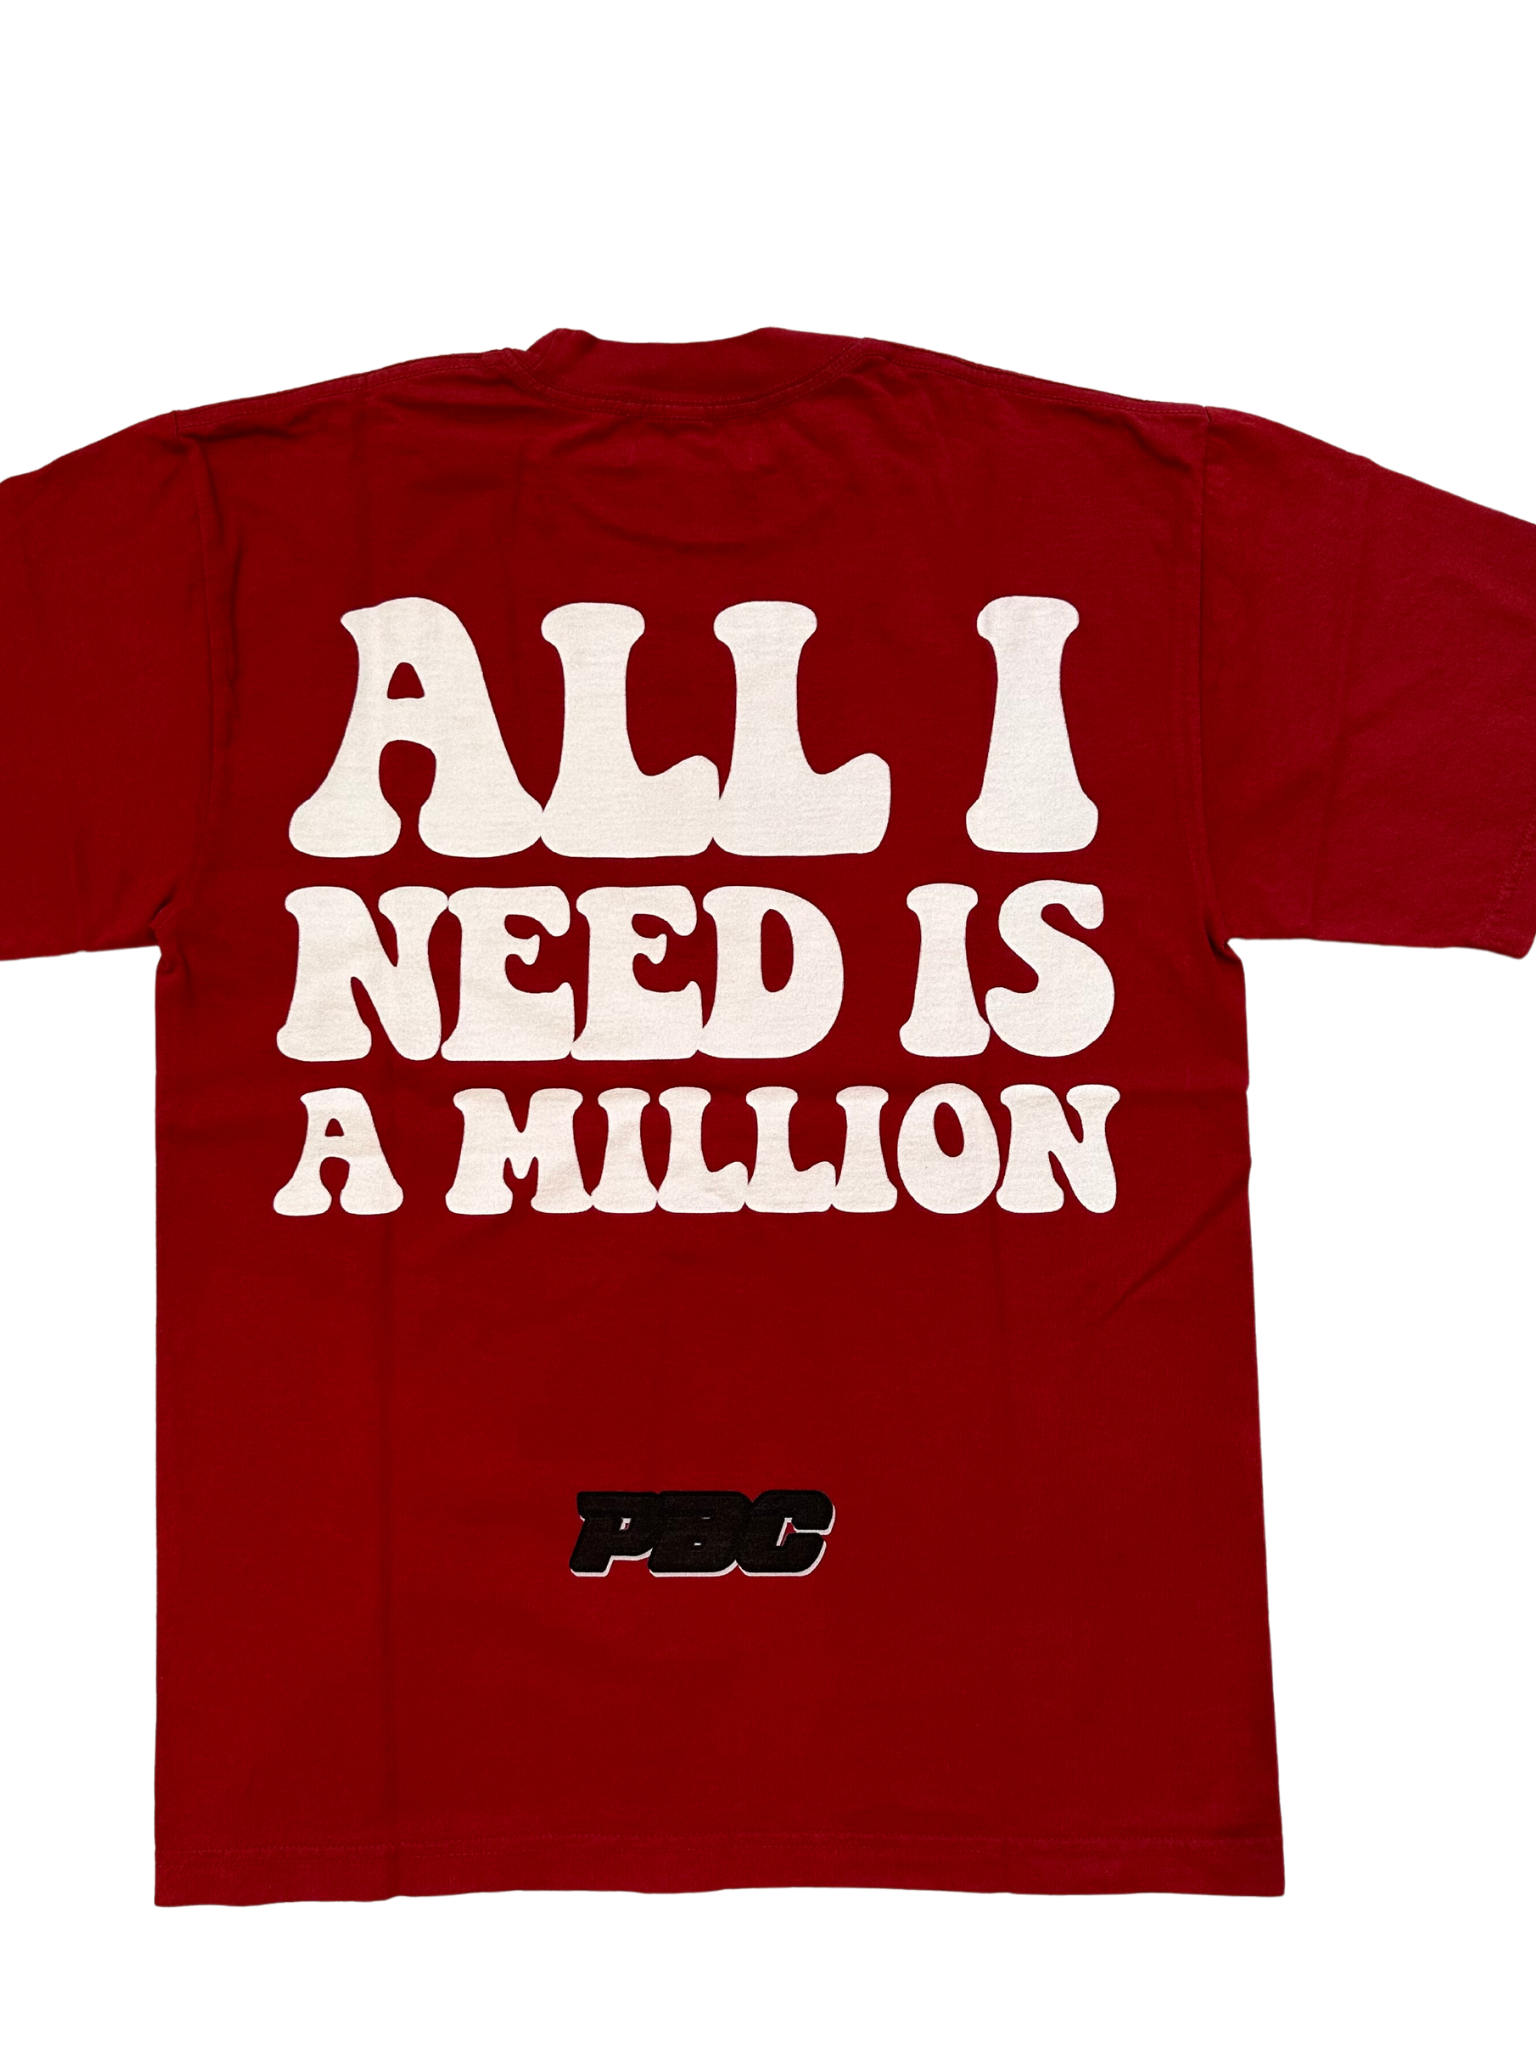 Red "A Milli" T-Shirt (QUICK STRIKE)